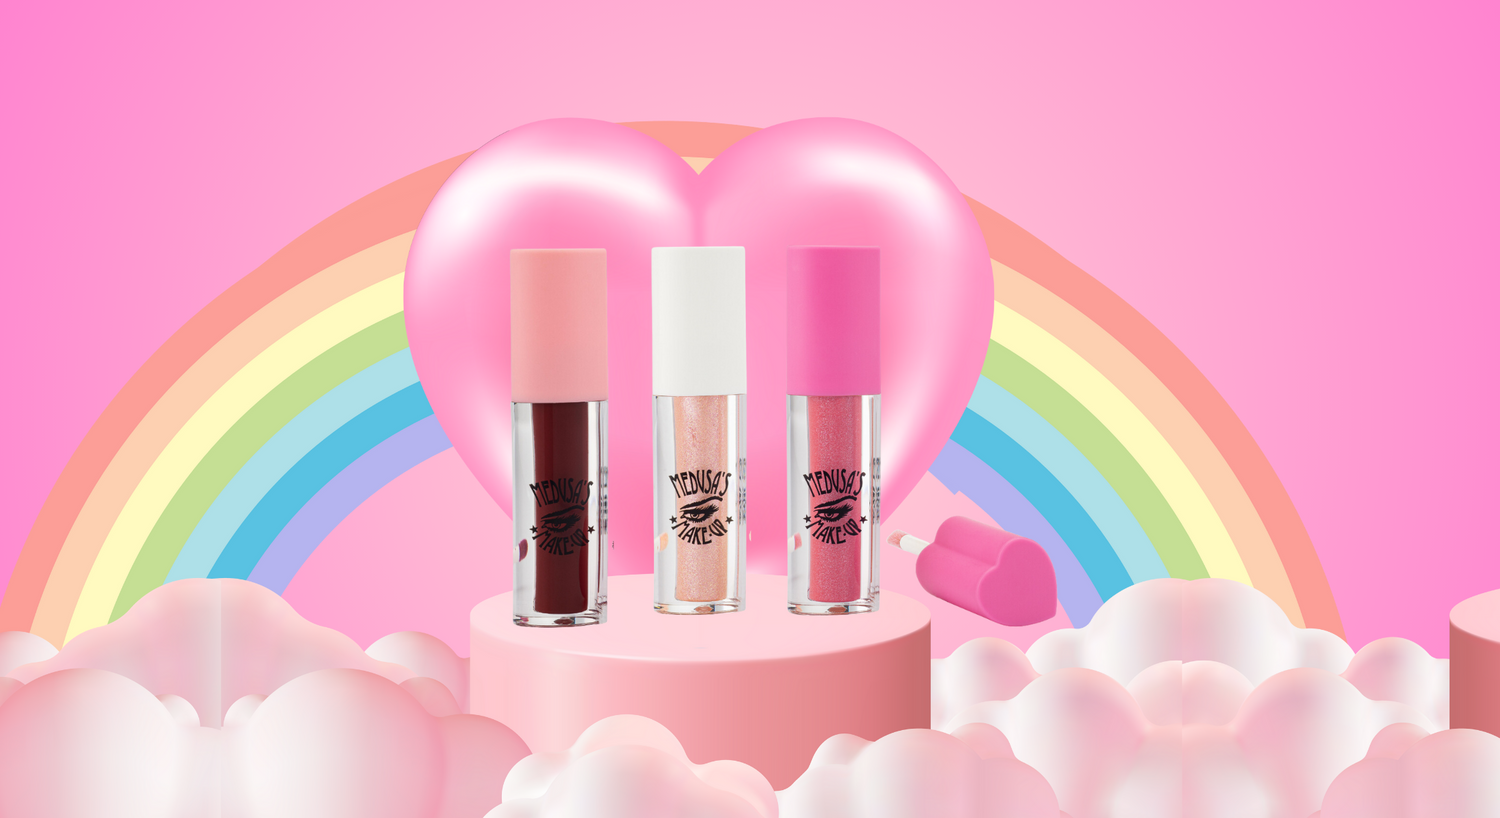 Medusa's Makeup lip gloss bundle "I heart me" plush trio on clouds and rainbow